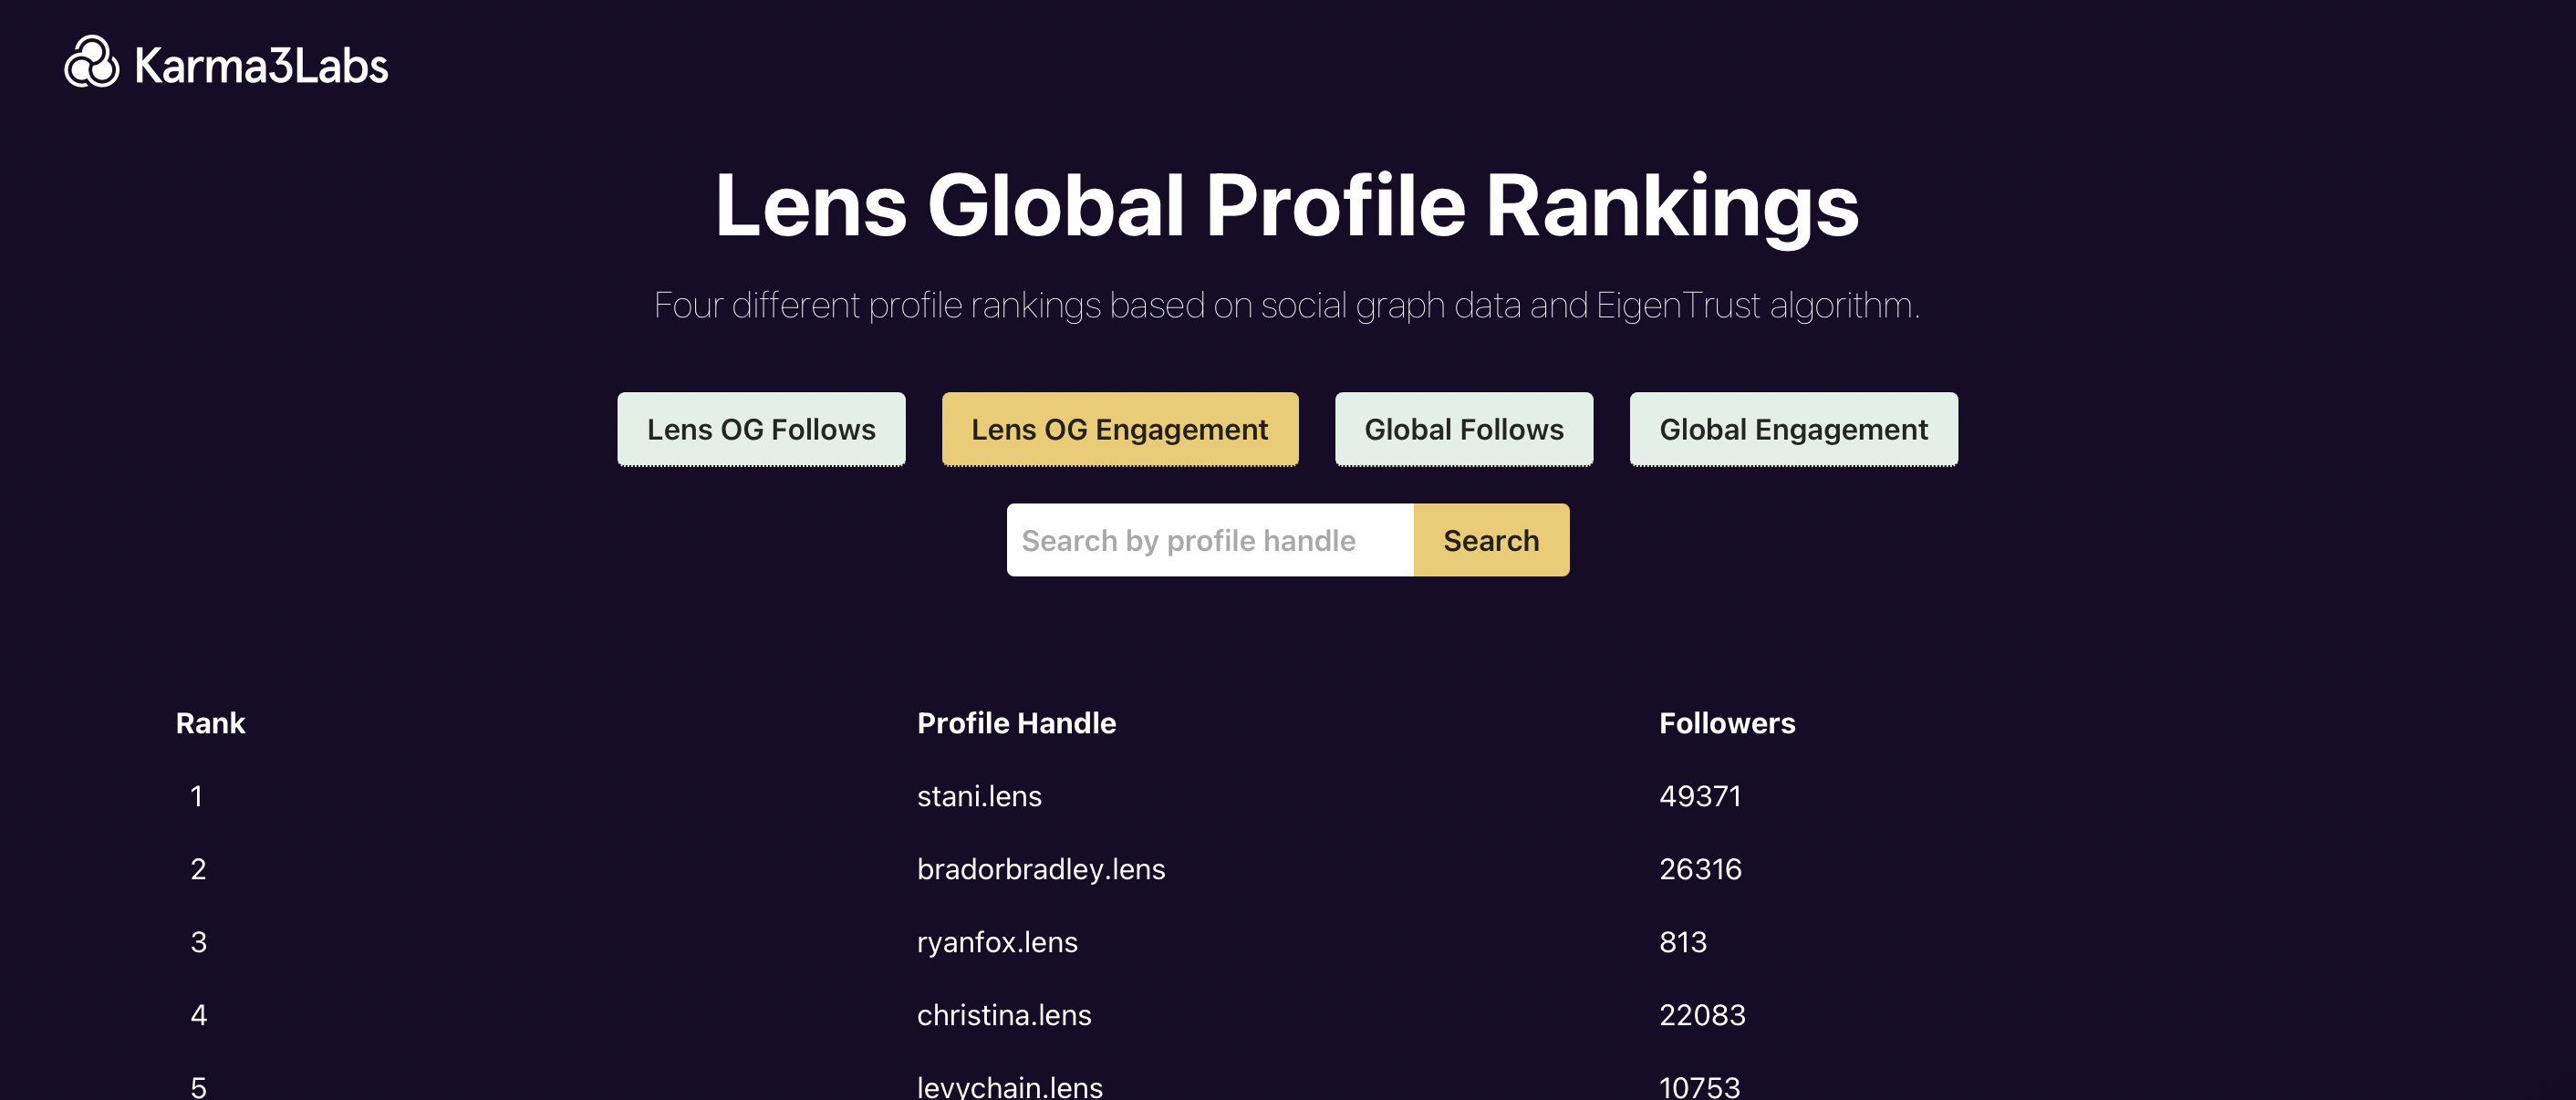 Global Rankings based on EigenTrust scores